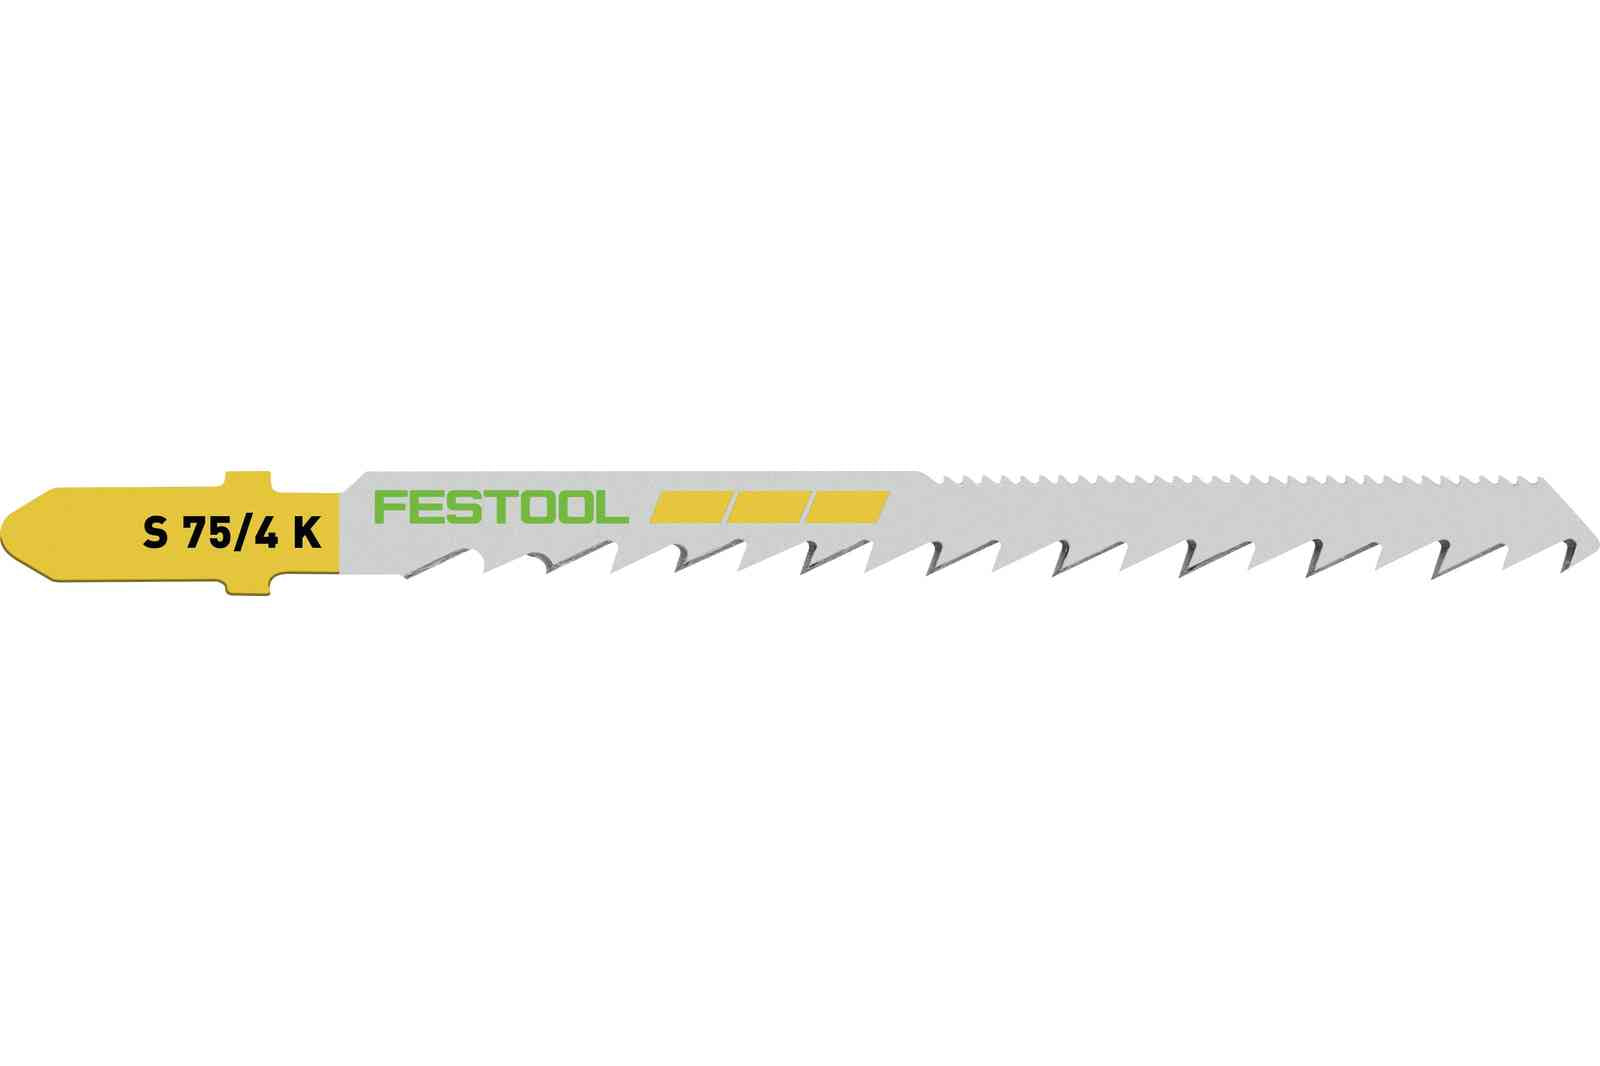 Festool Jigsaw blade WOOD CURVES S 75/4 K/20 204266 Power Tool Services